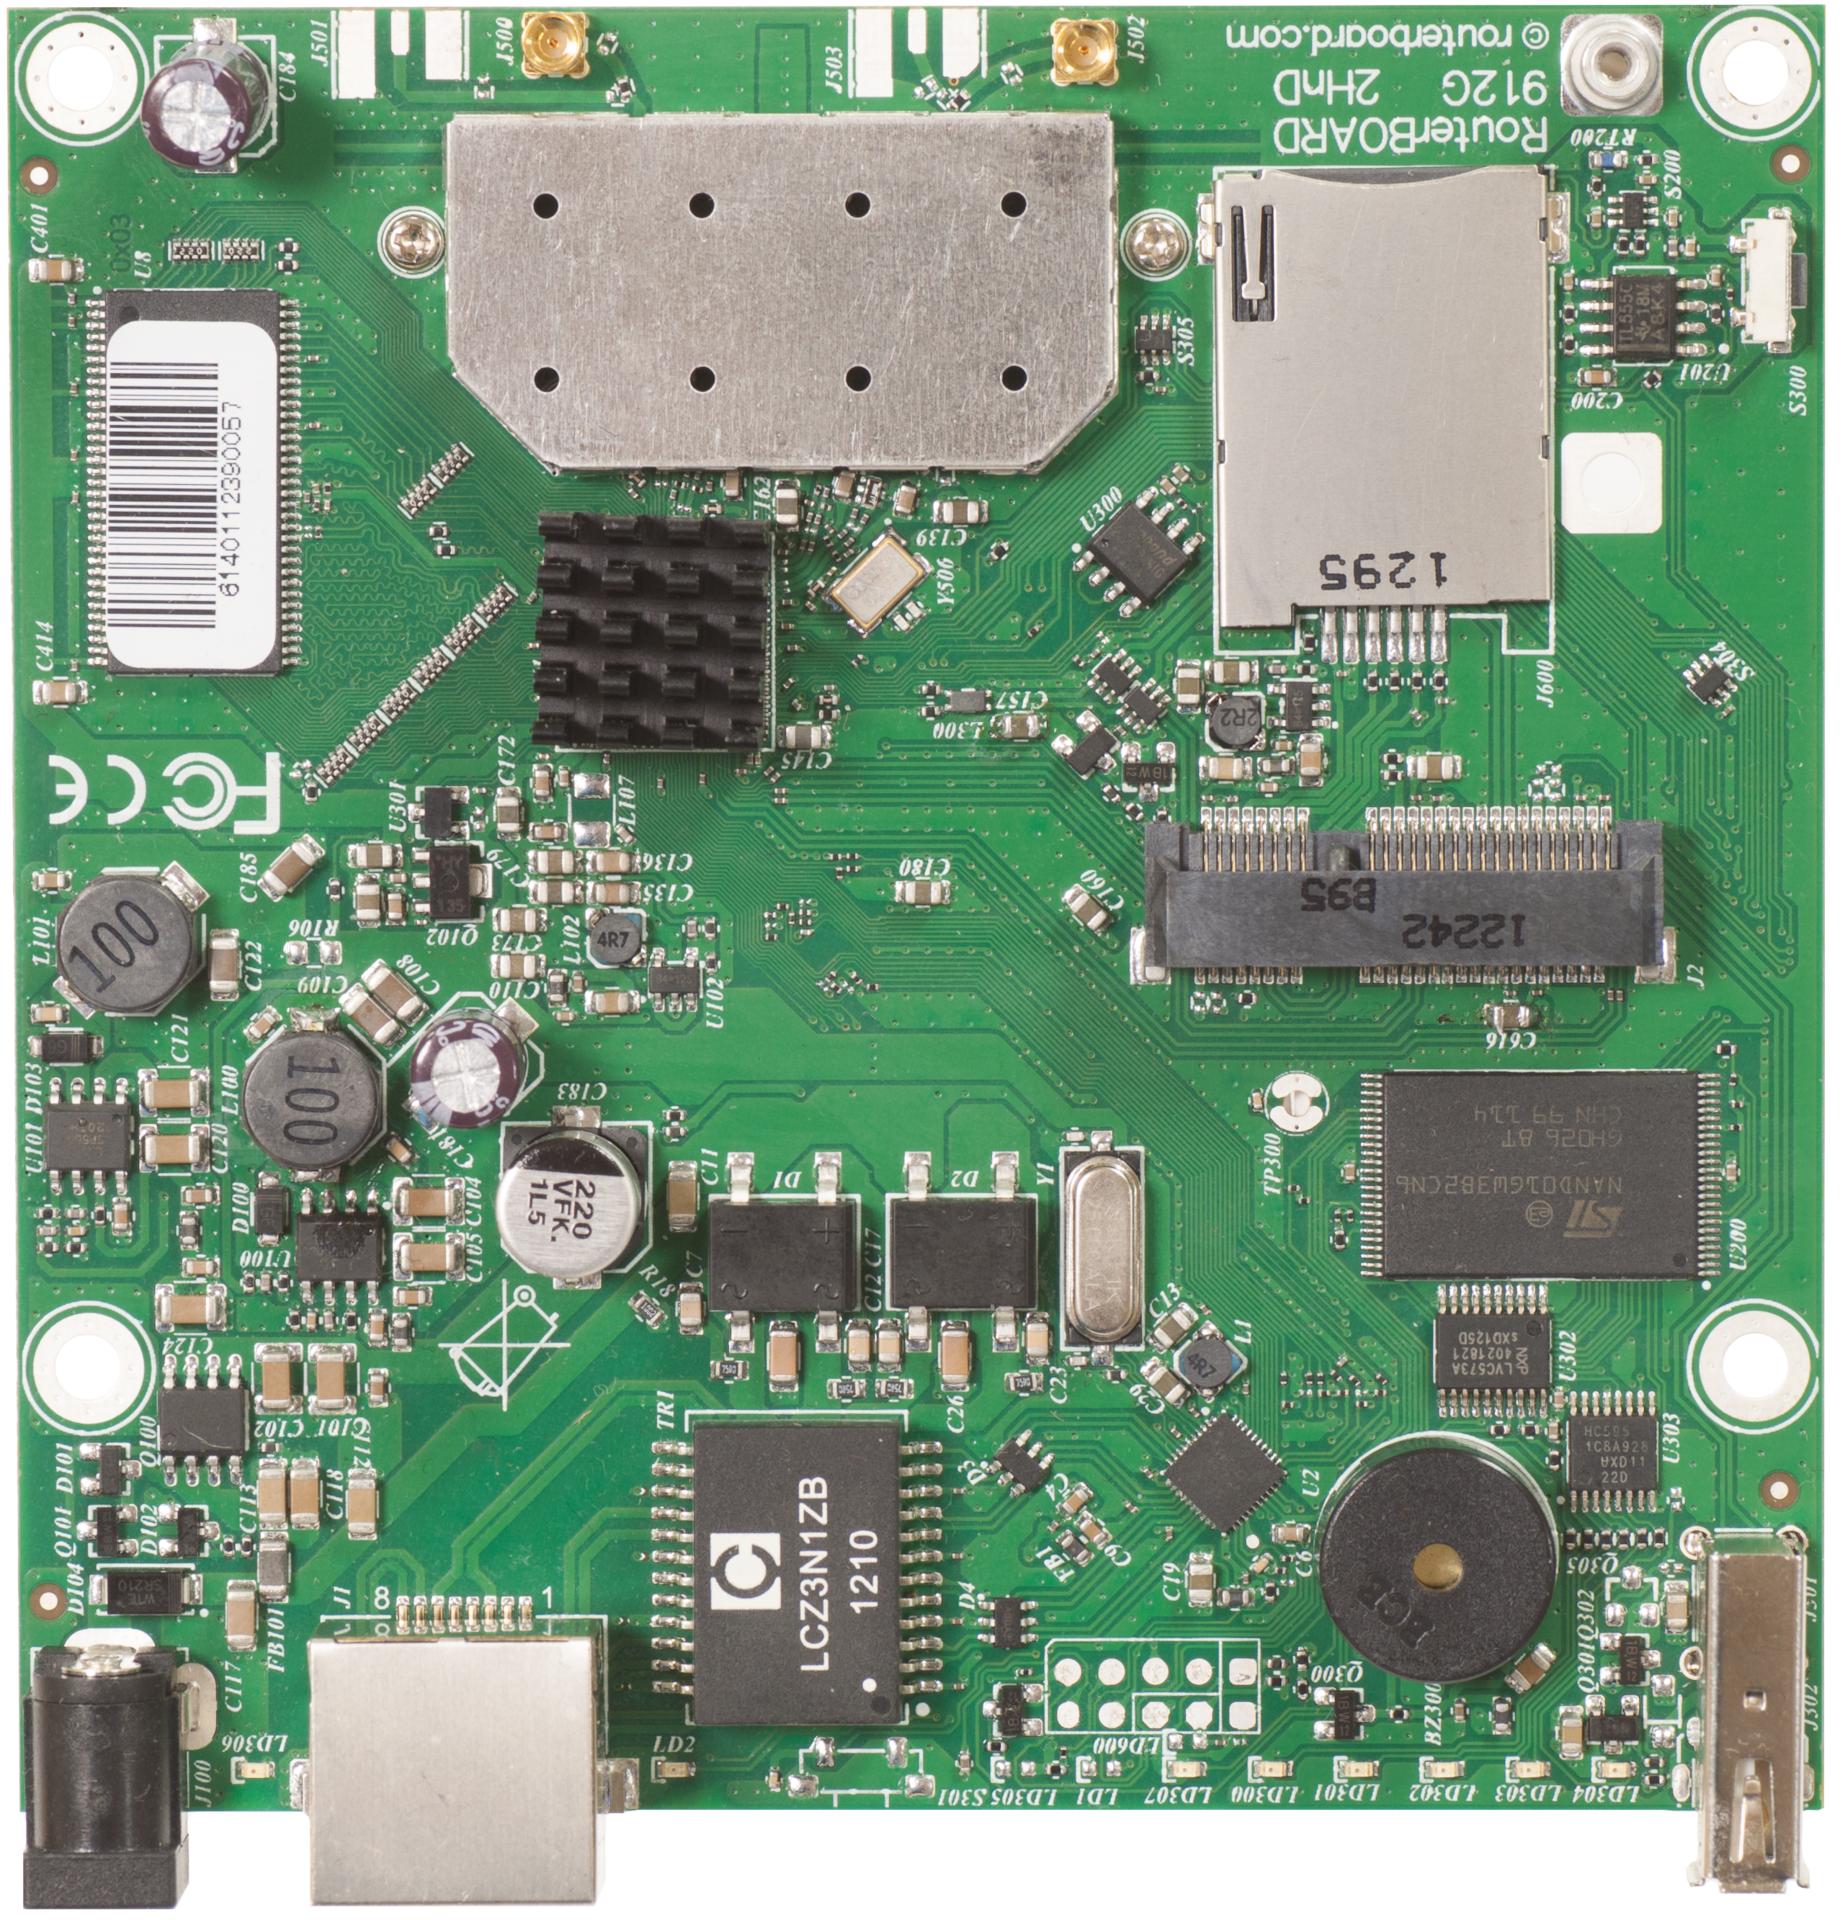 Mikrotik RB912UAG-2HPND. WLAN-Band: Einzelband (2,4GHz), Top WLAN-Standard: IEEE 802.11n, WLAN Datentransferrate (max.): 983,7 Mbit/s. Prozessor: AR9342, Prozessor-Taktfrequenz: 600 MHz. Basic Switching RJ-45 Ethernet Ports-Typ: Gigabit Ethernet (10/100/1000), USB-Port-Typ: USB Type-A, SIM-Kartentyp: Mini-SIM. Power-over-Ethernet (PoE) Spannungsbereich: 8 - 30 V. Netzstecker: DC-in-jack, Stromverbrauch (max.): 13,5 W (10105)